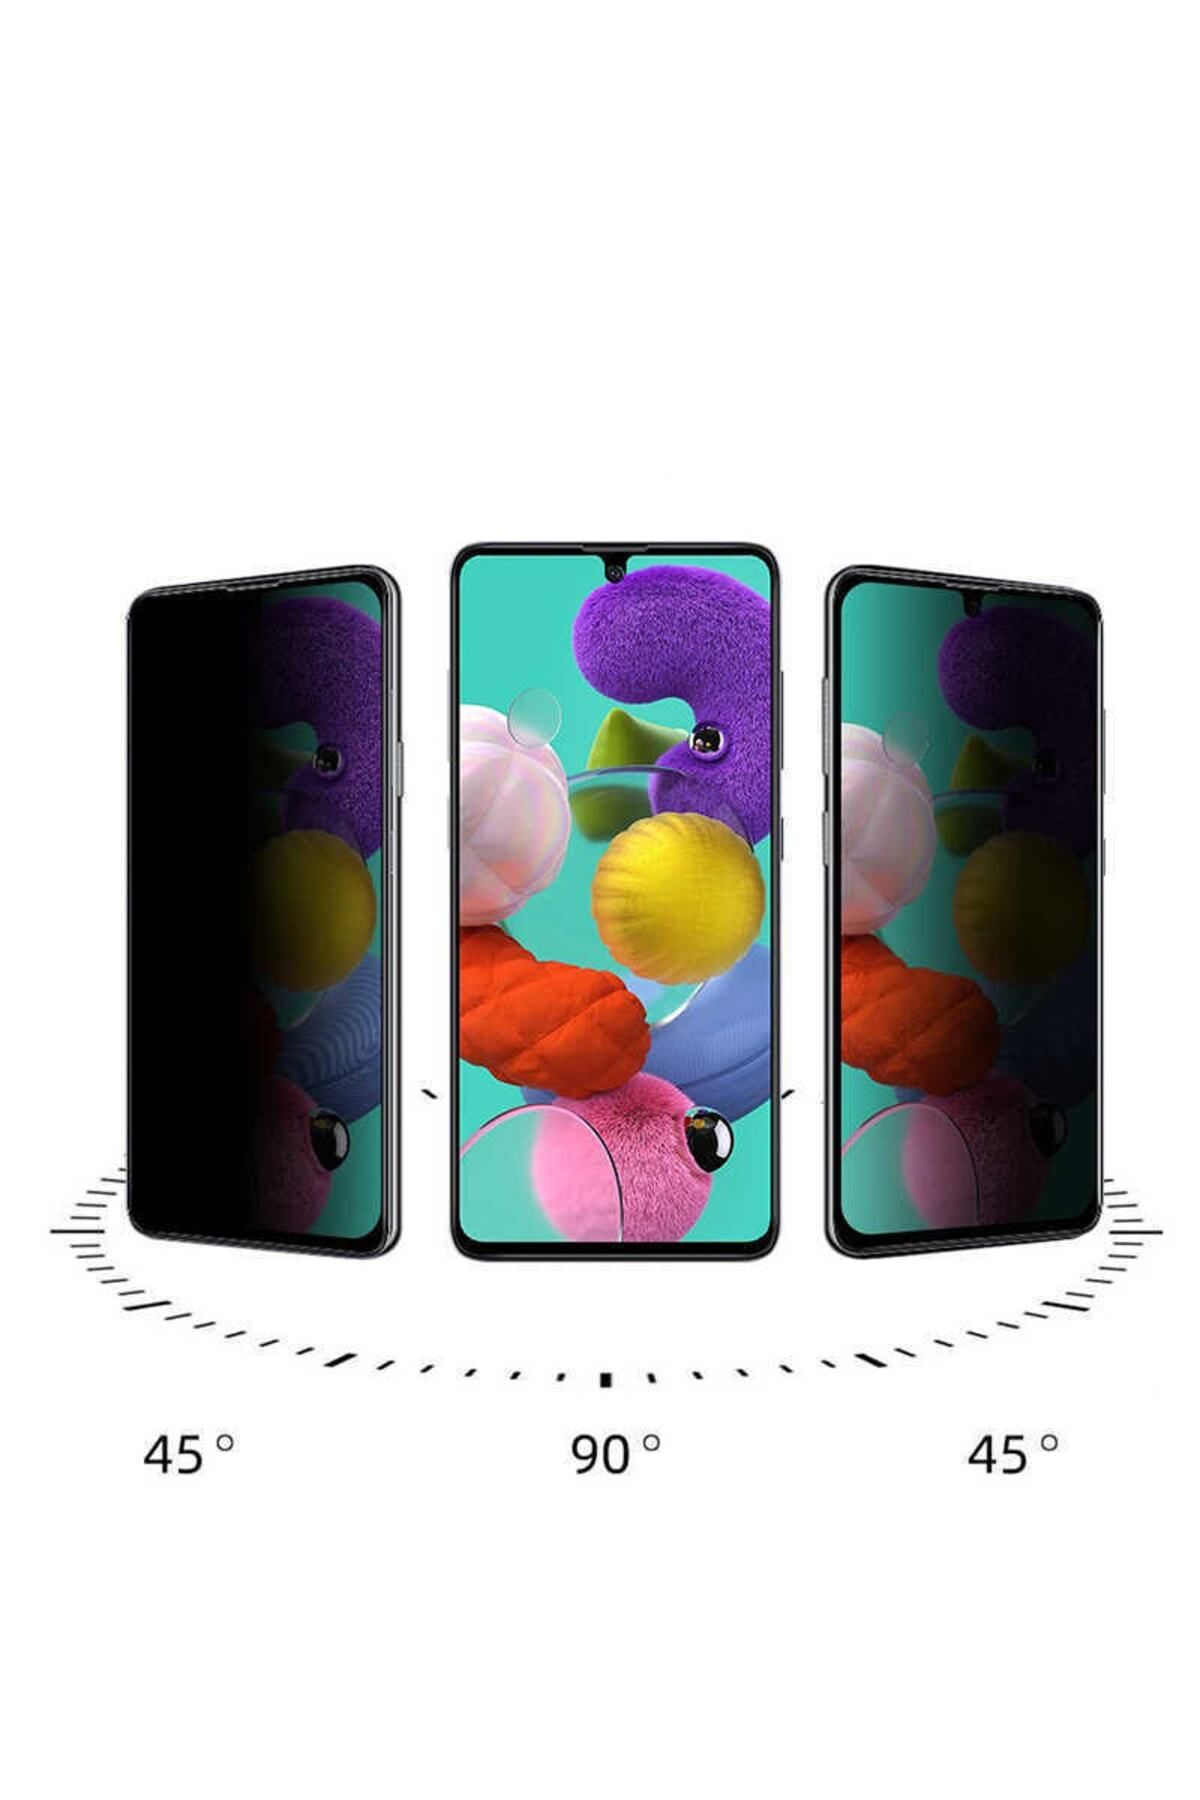 Dolia Samsung Galaxy S21 Fe Uyumlu Ekran Koruyucu Tam Kaplayan Gizlilik Filtreli, Hd, Hayalet Cam